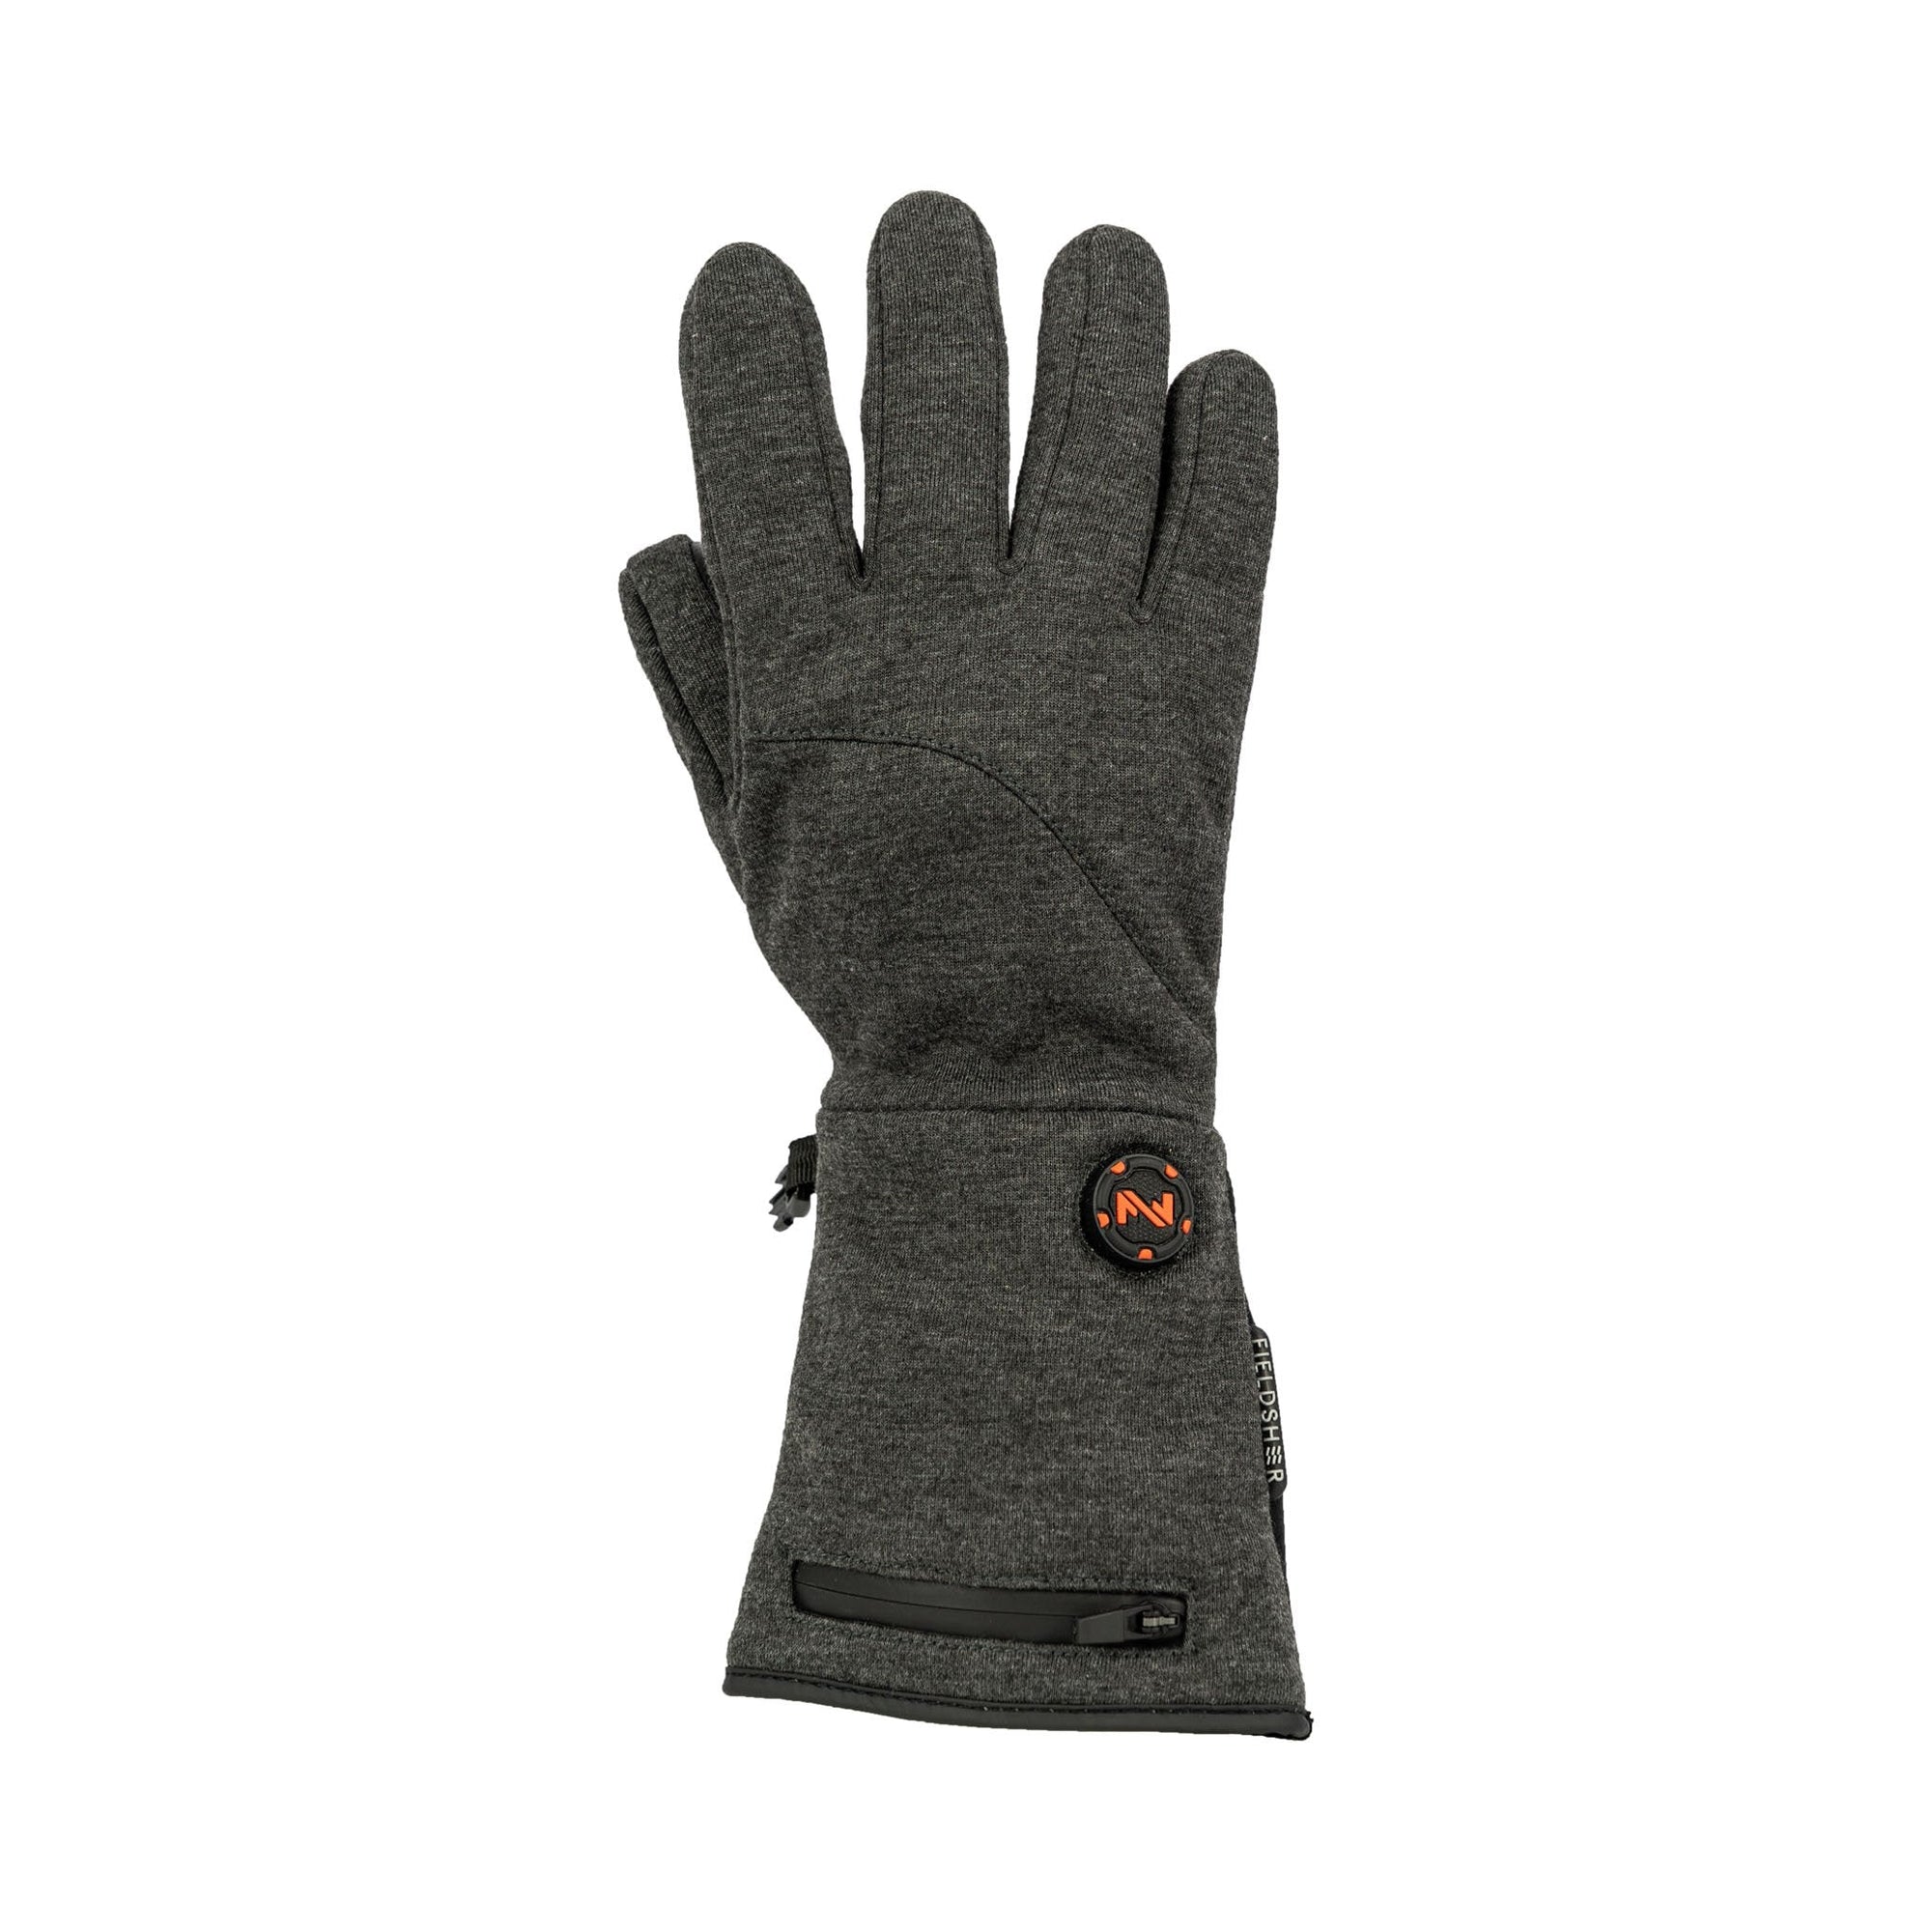 Thermal Heated Glove - Unisex Black